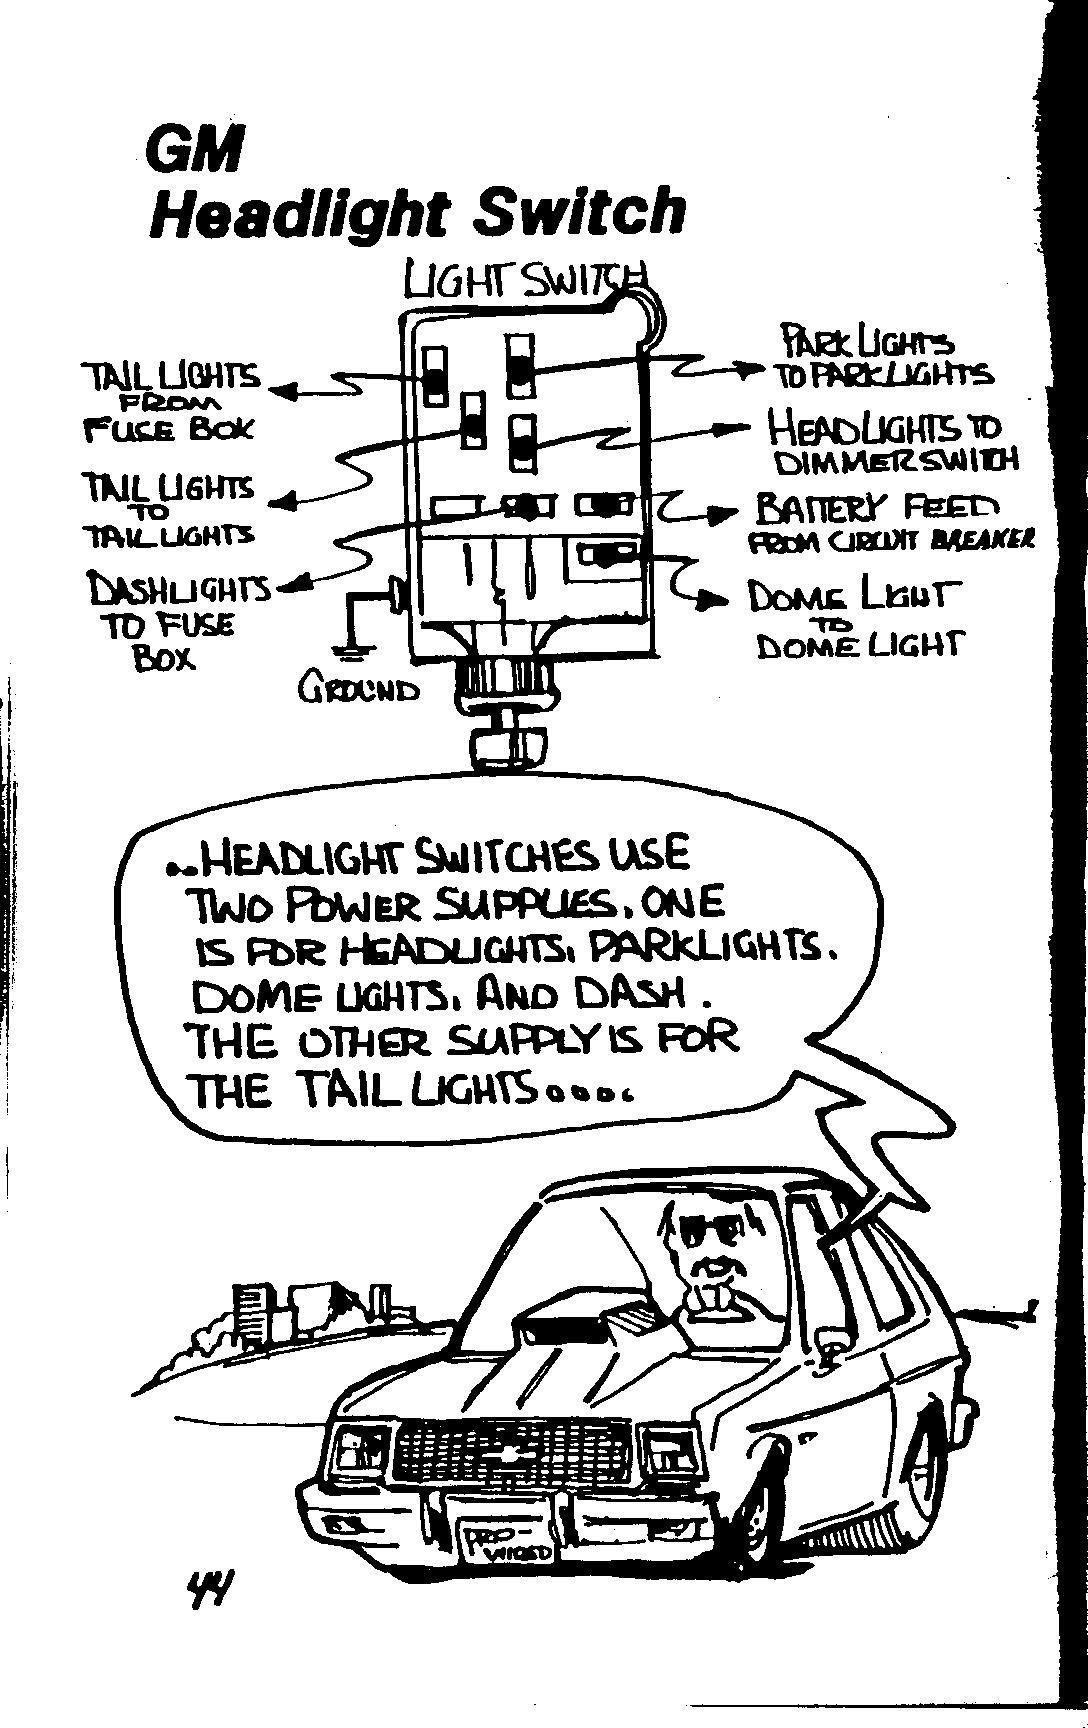 1970 Gm Headlight Switch Wiring Diagram from ls1tech.com